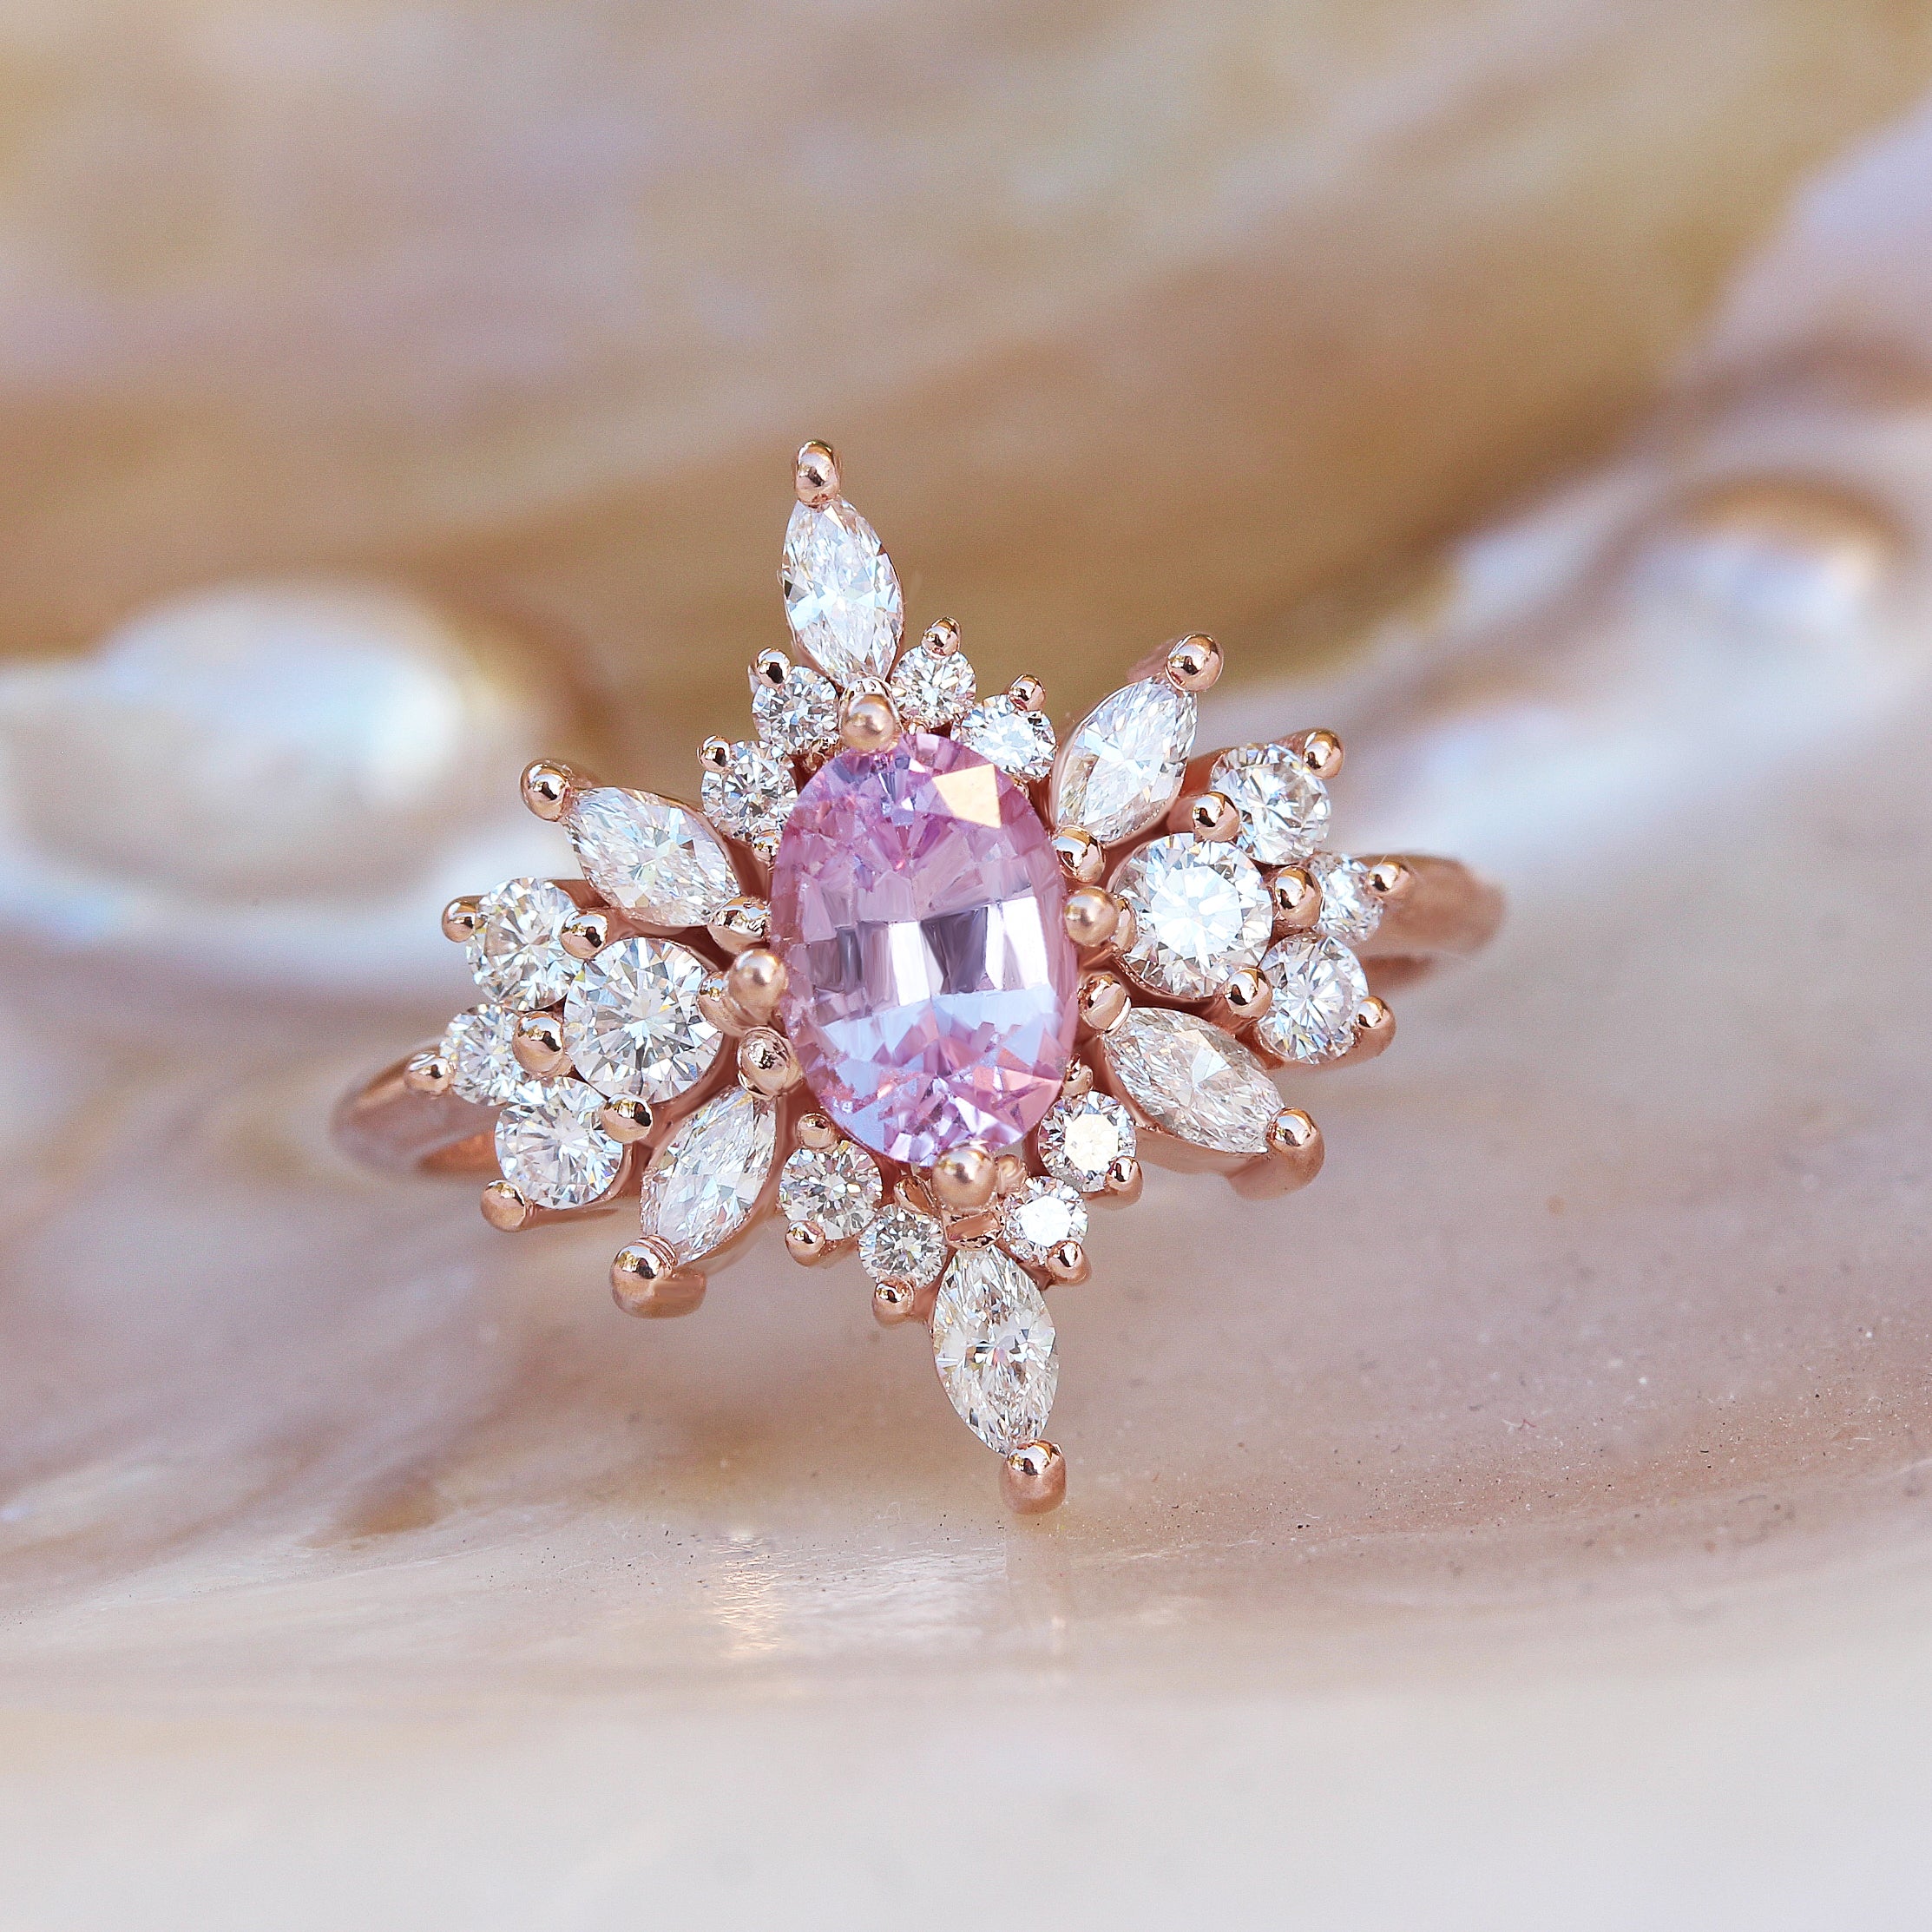 Oval pink sapphire & diamonds engagement ring,  Phoenix ♥